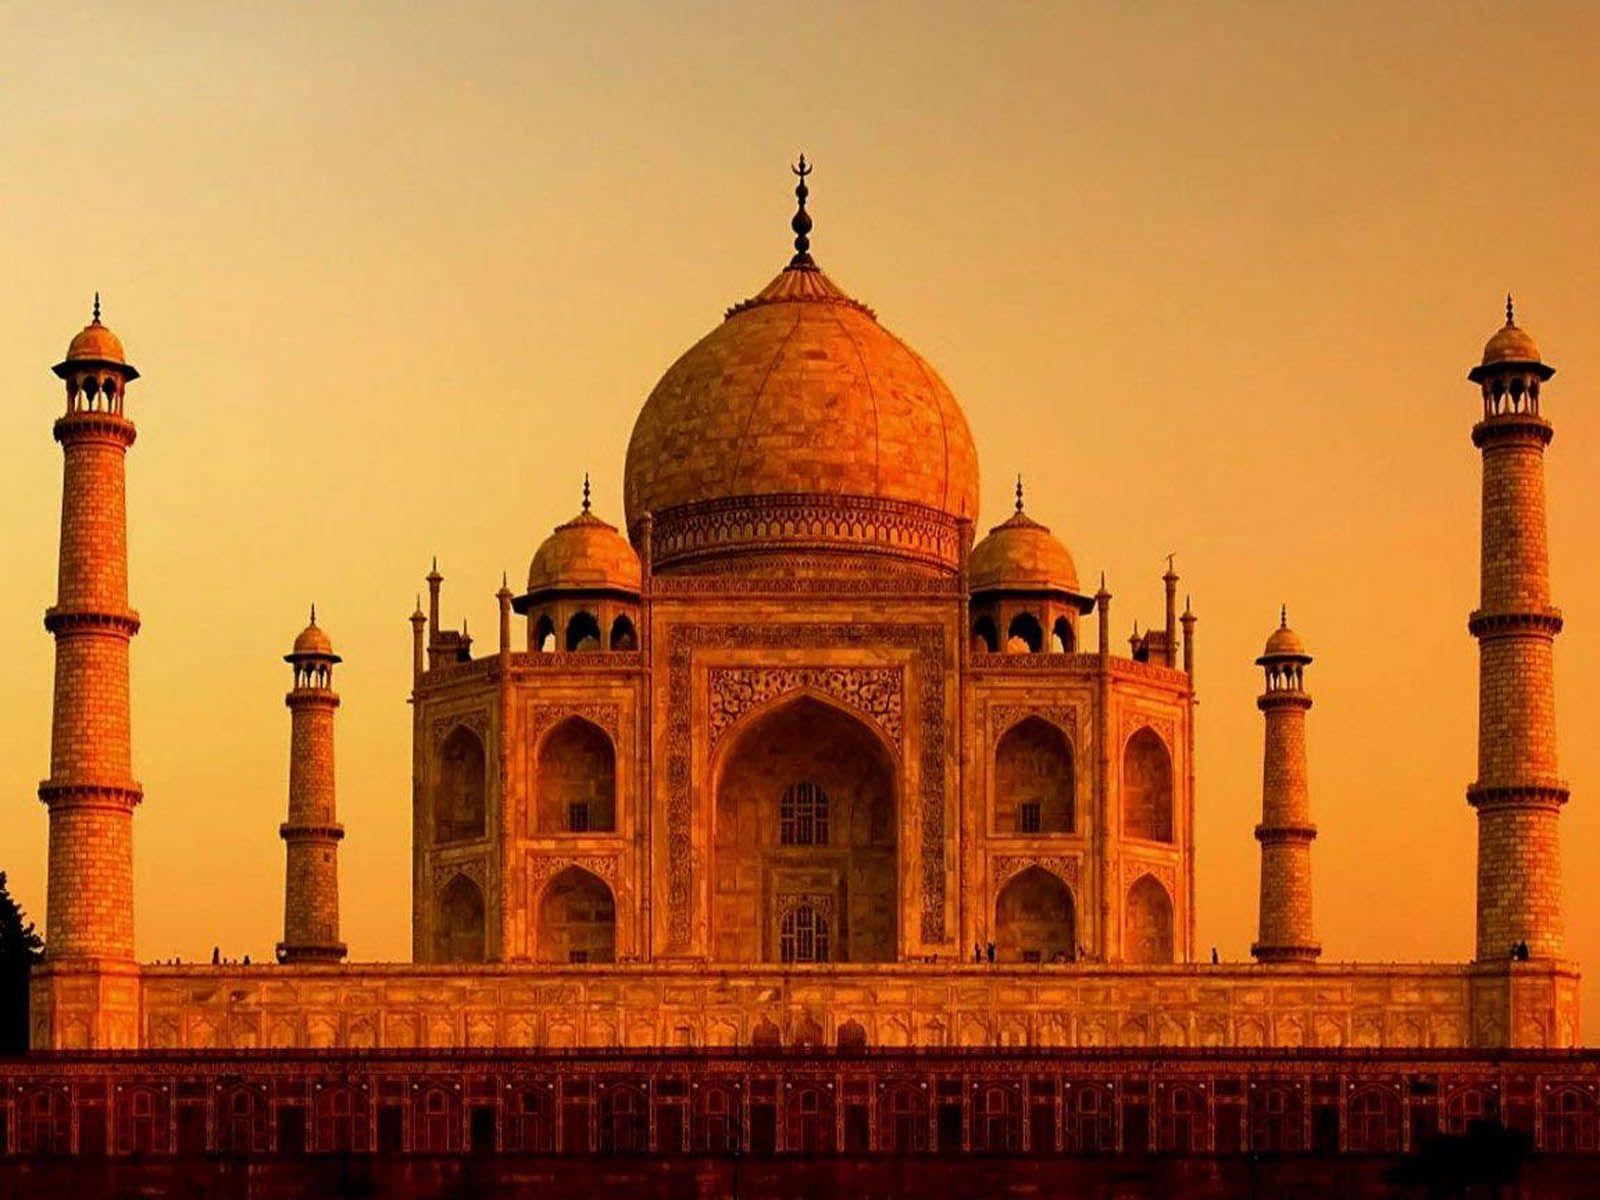 TIL The Taj Mahal is actually the Tejo Mahalya